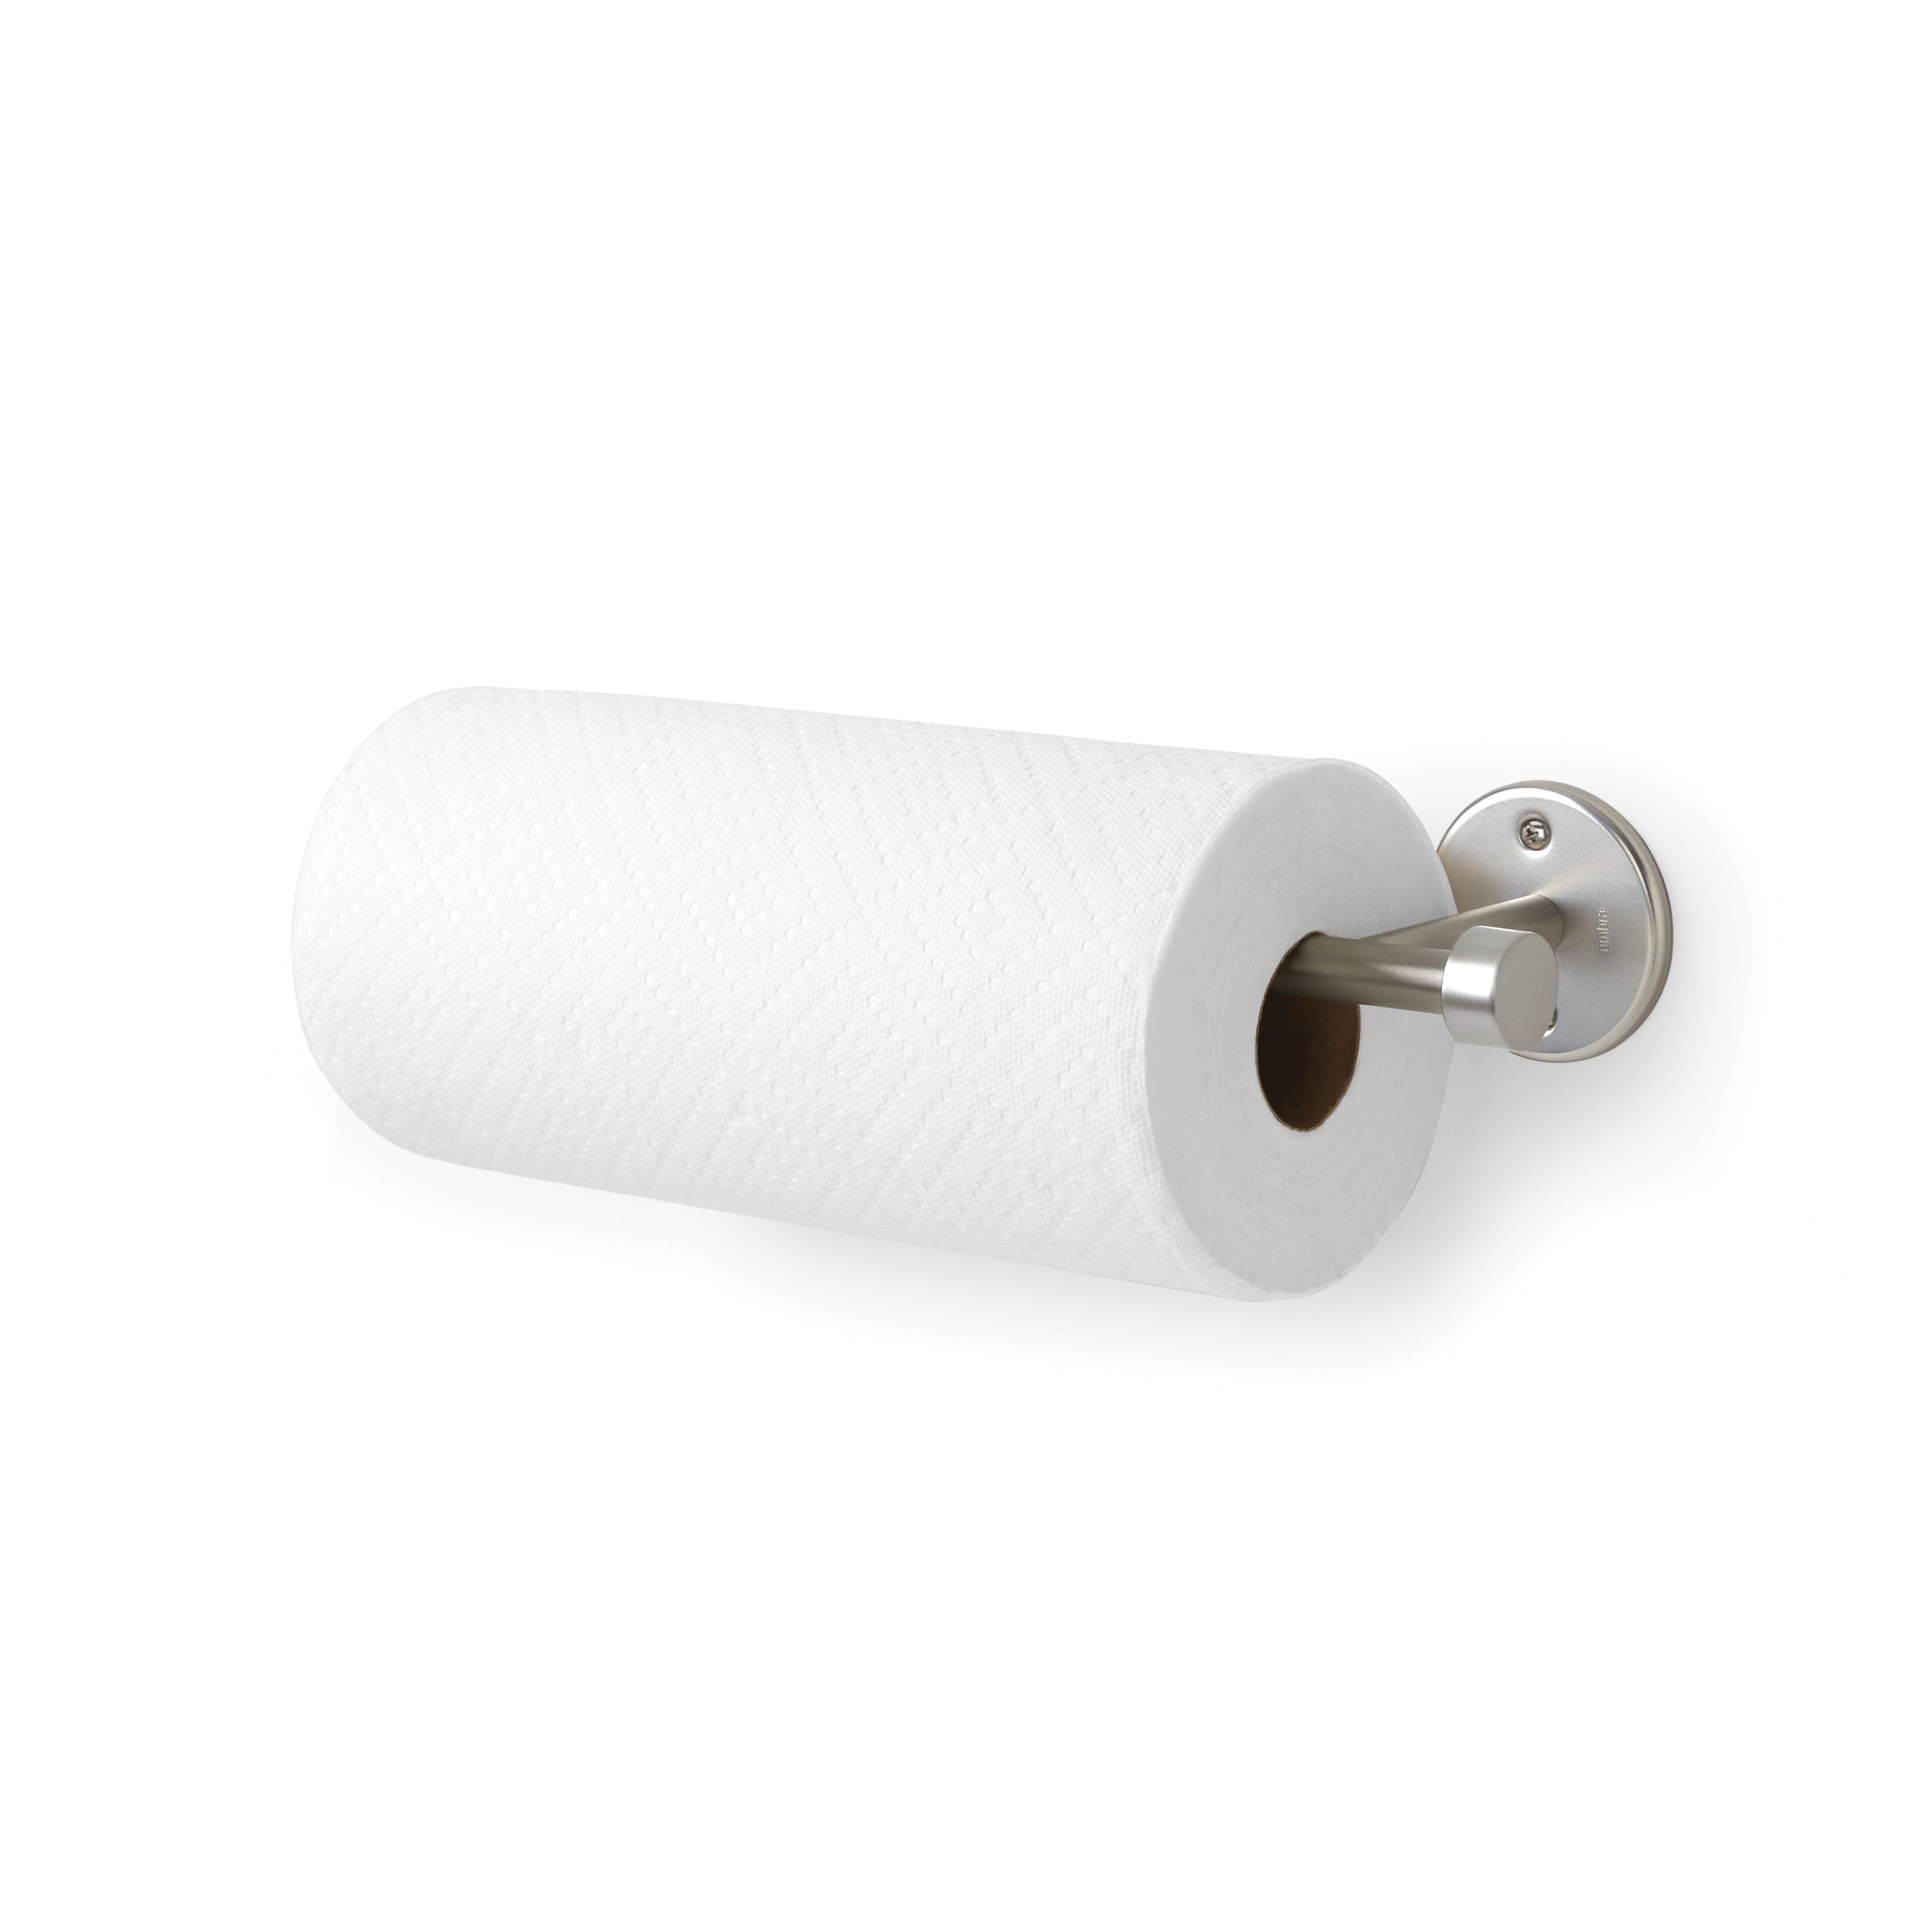 Umbra Stream Wall-Mount Paper Towel Holder (Nickel)